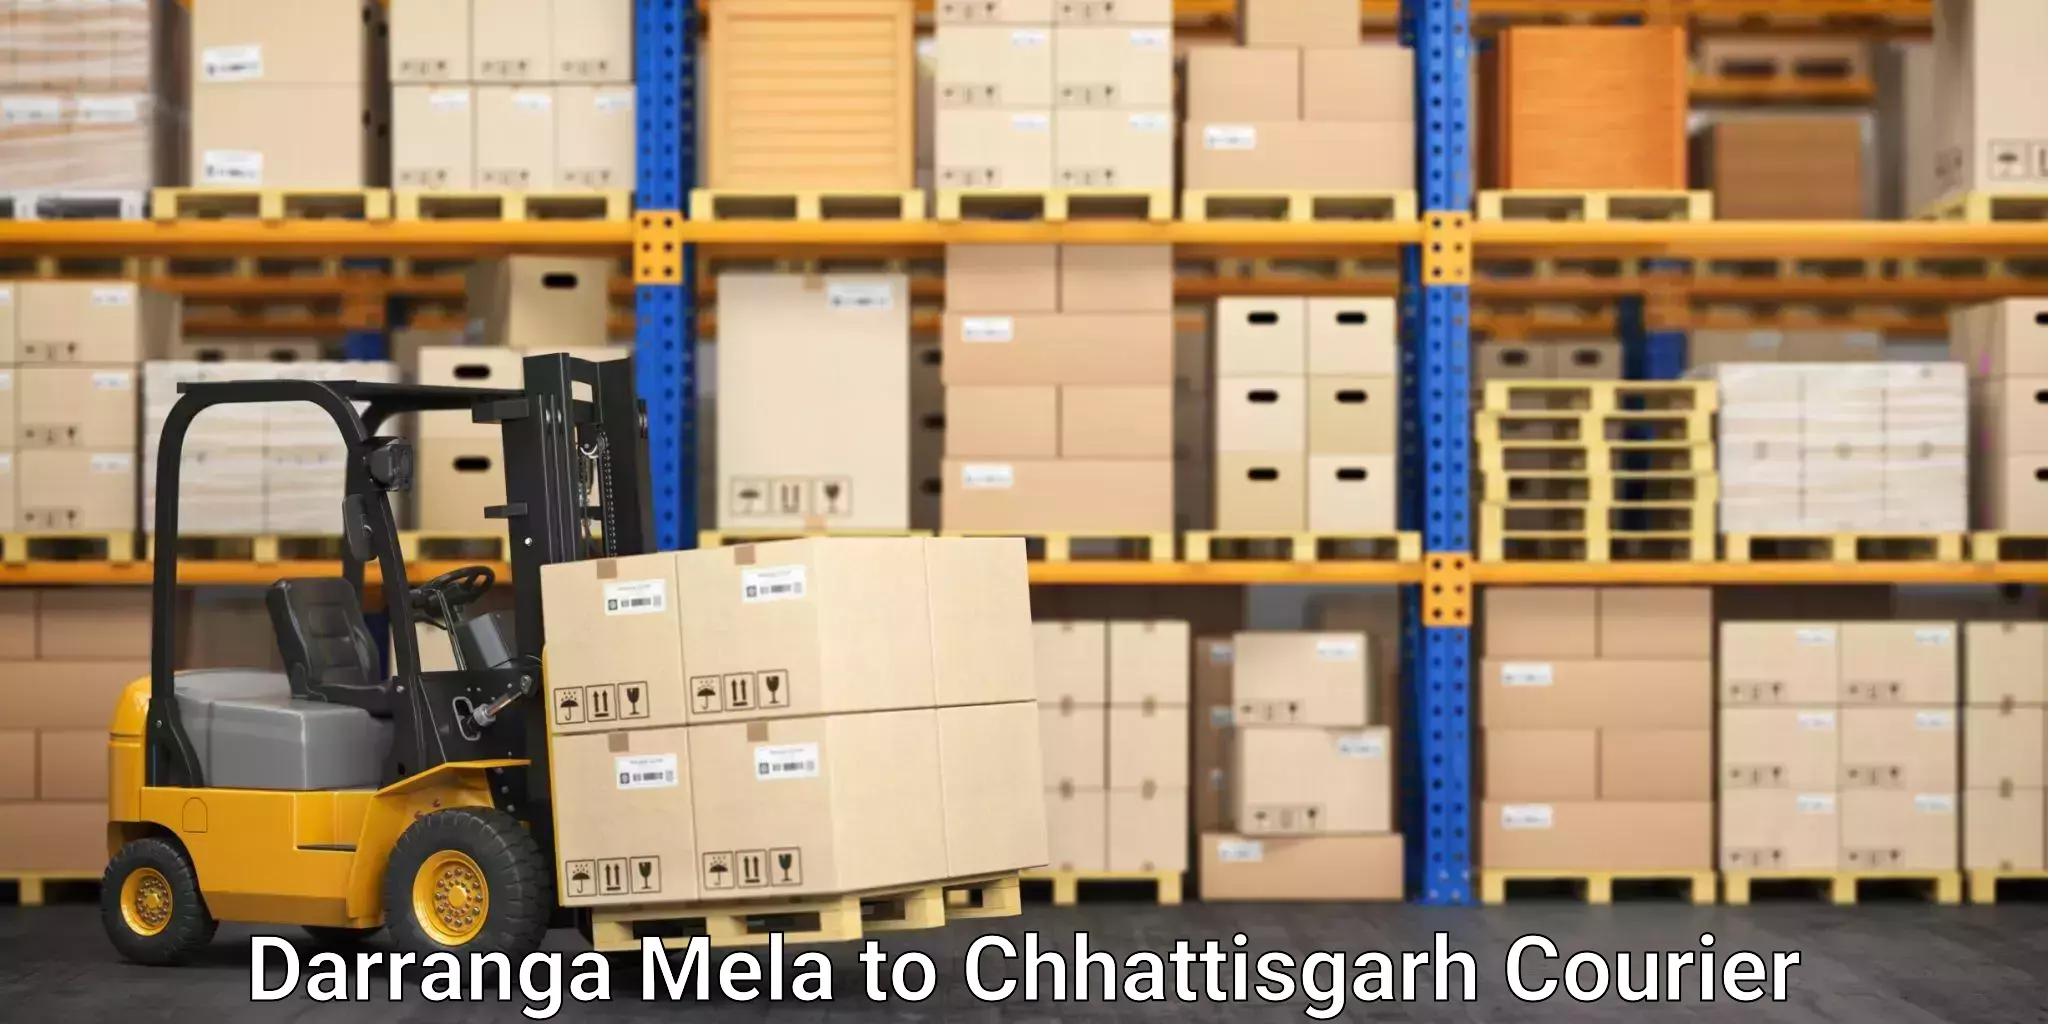 Online shipping calculator Darranga Mela to Chhattisgarh